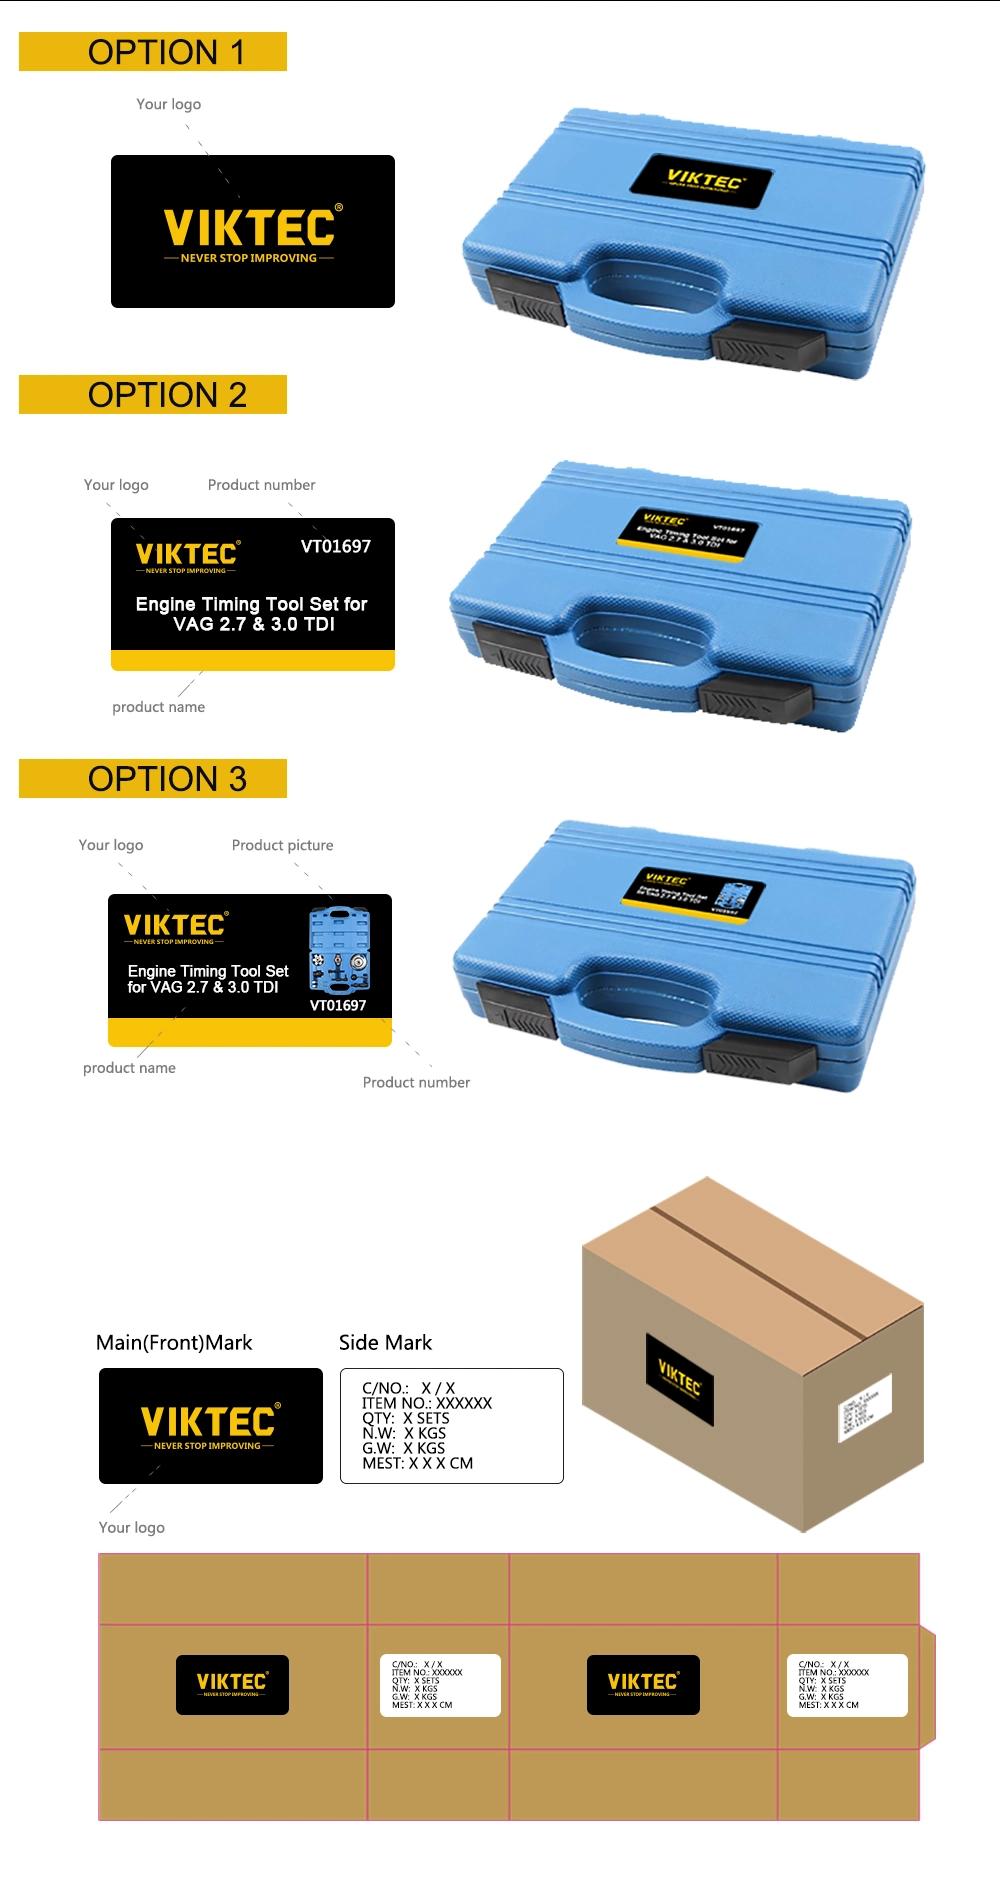 Viktec CE 3PC 1/2"Sq Drive Alloy Wheel Deep Impact Socket Set with 3 Extra Plastic Sleeves (VT01223C)